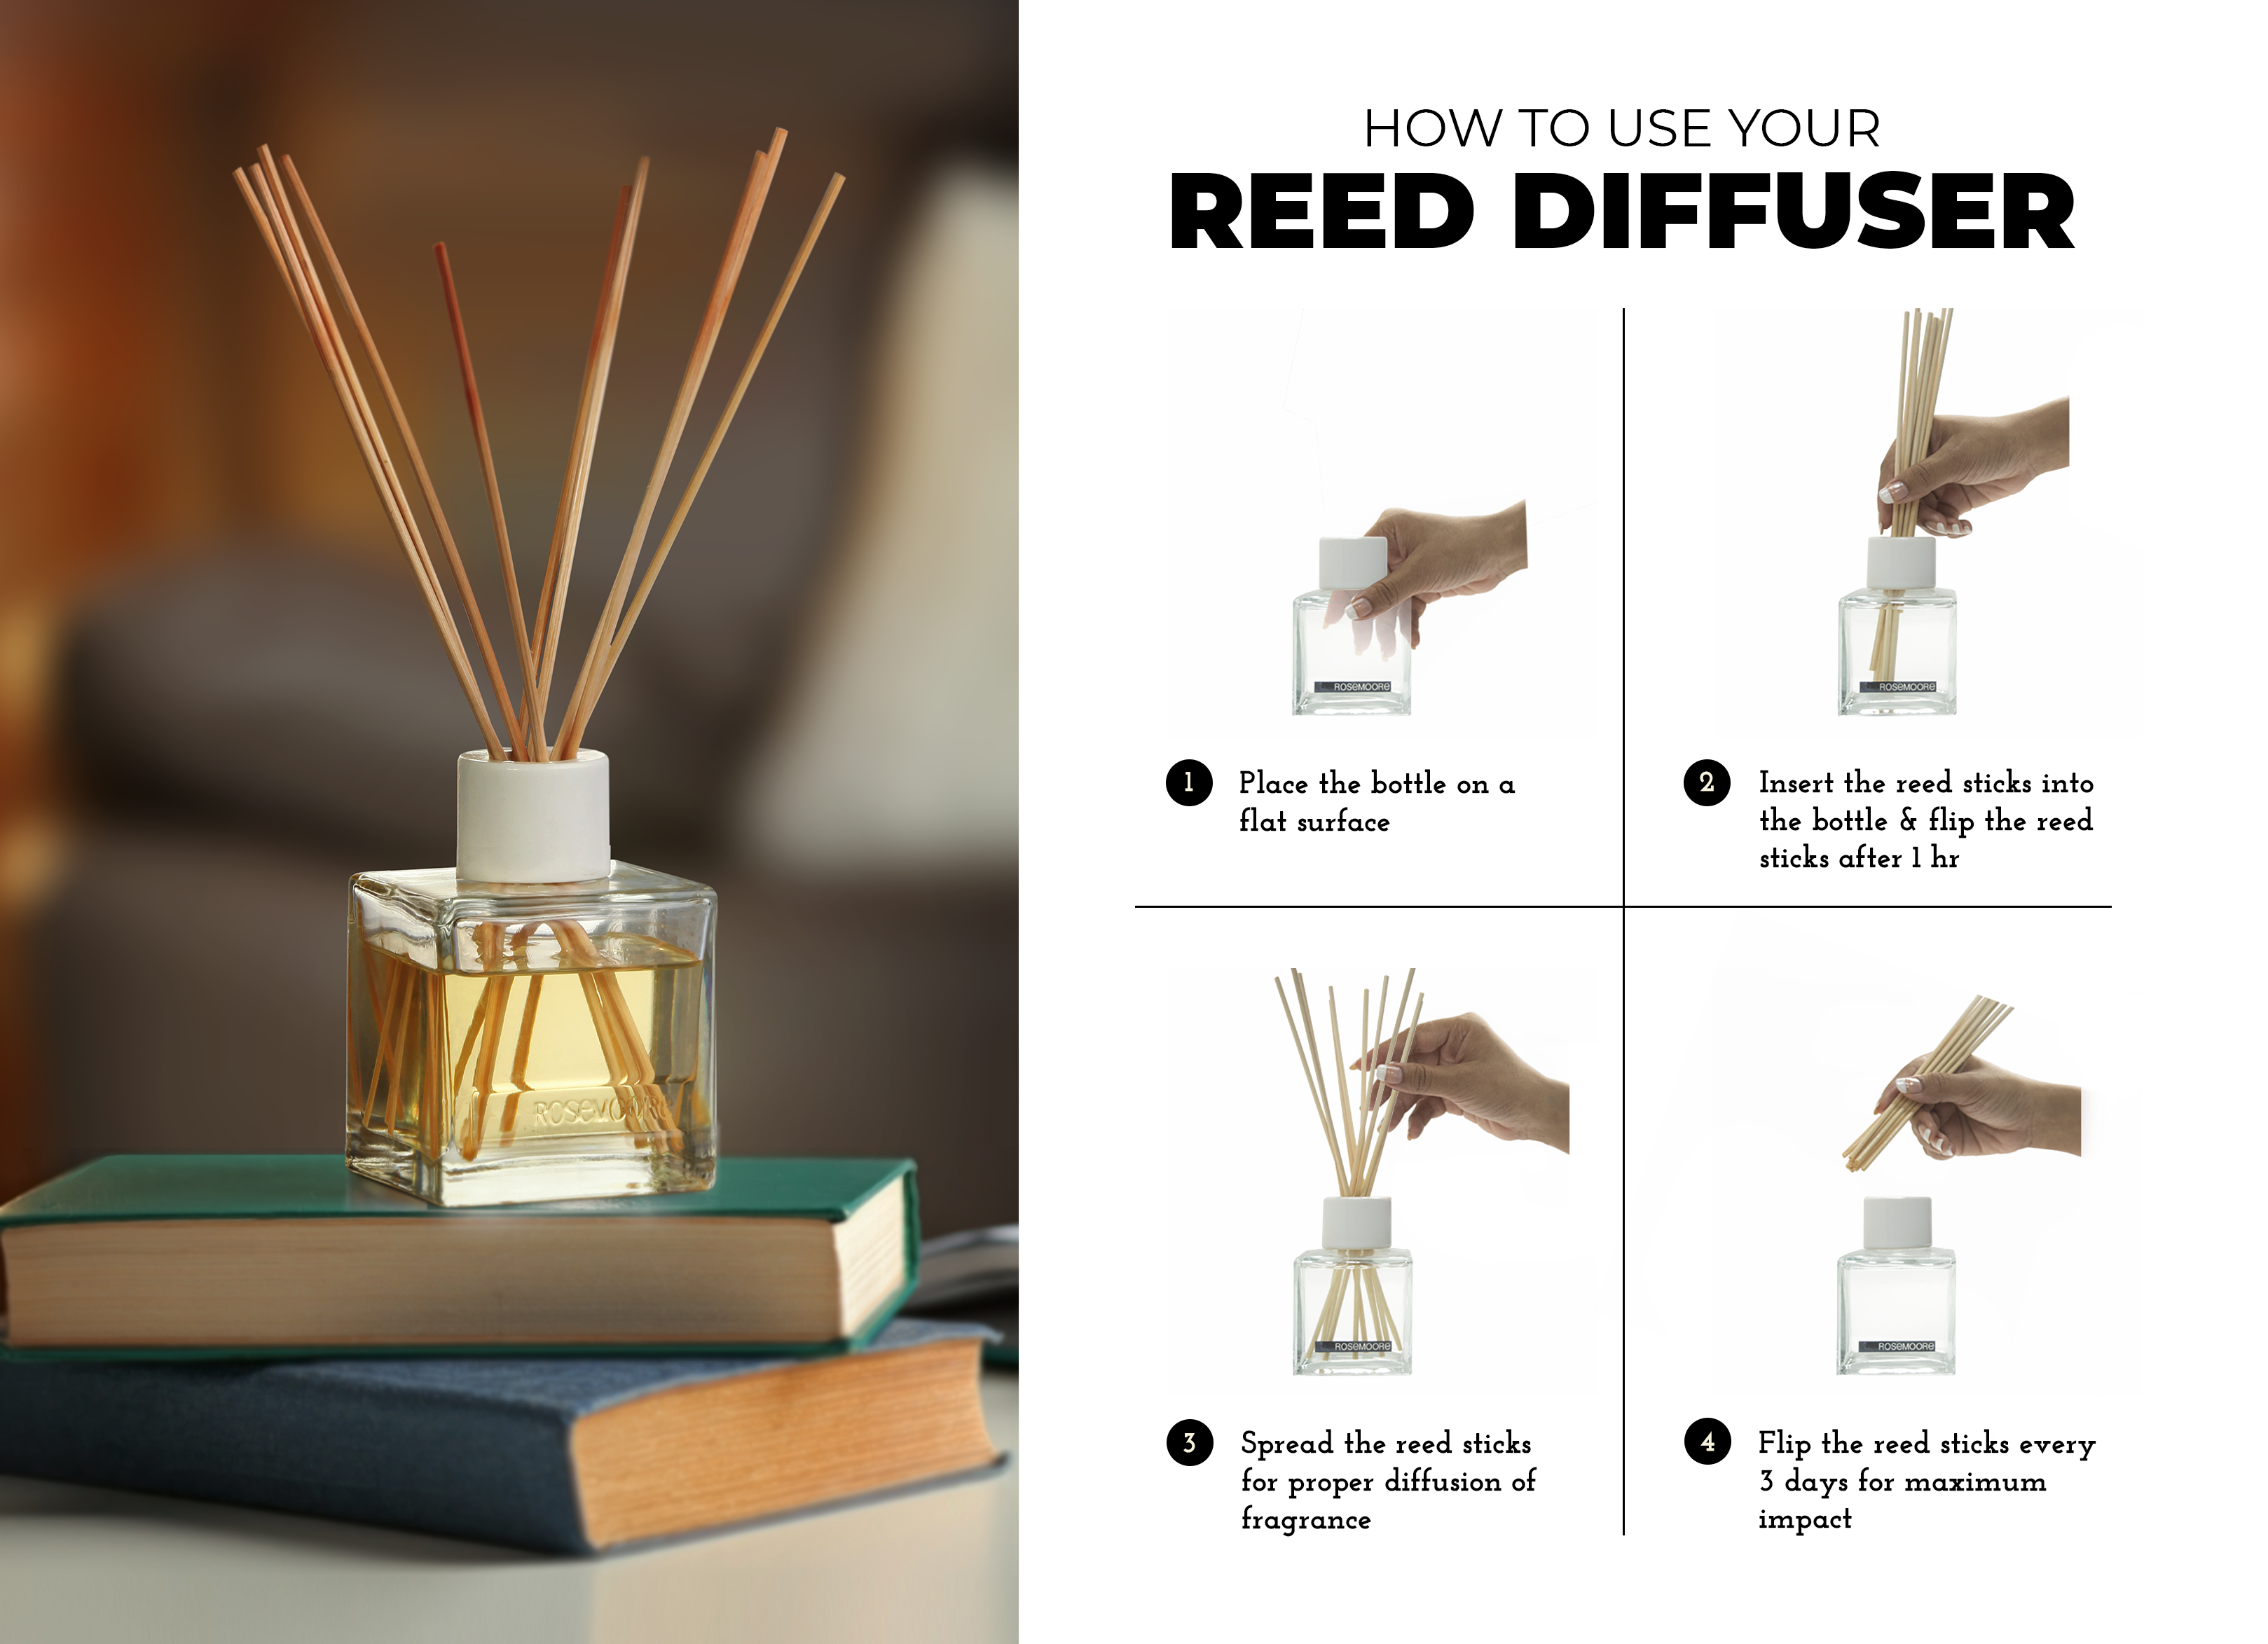 Buy Reed Diffuser Set Online.